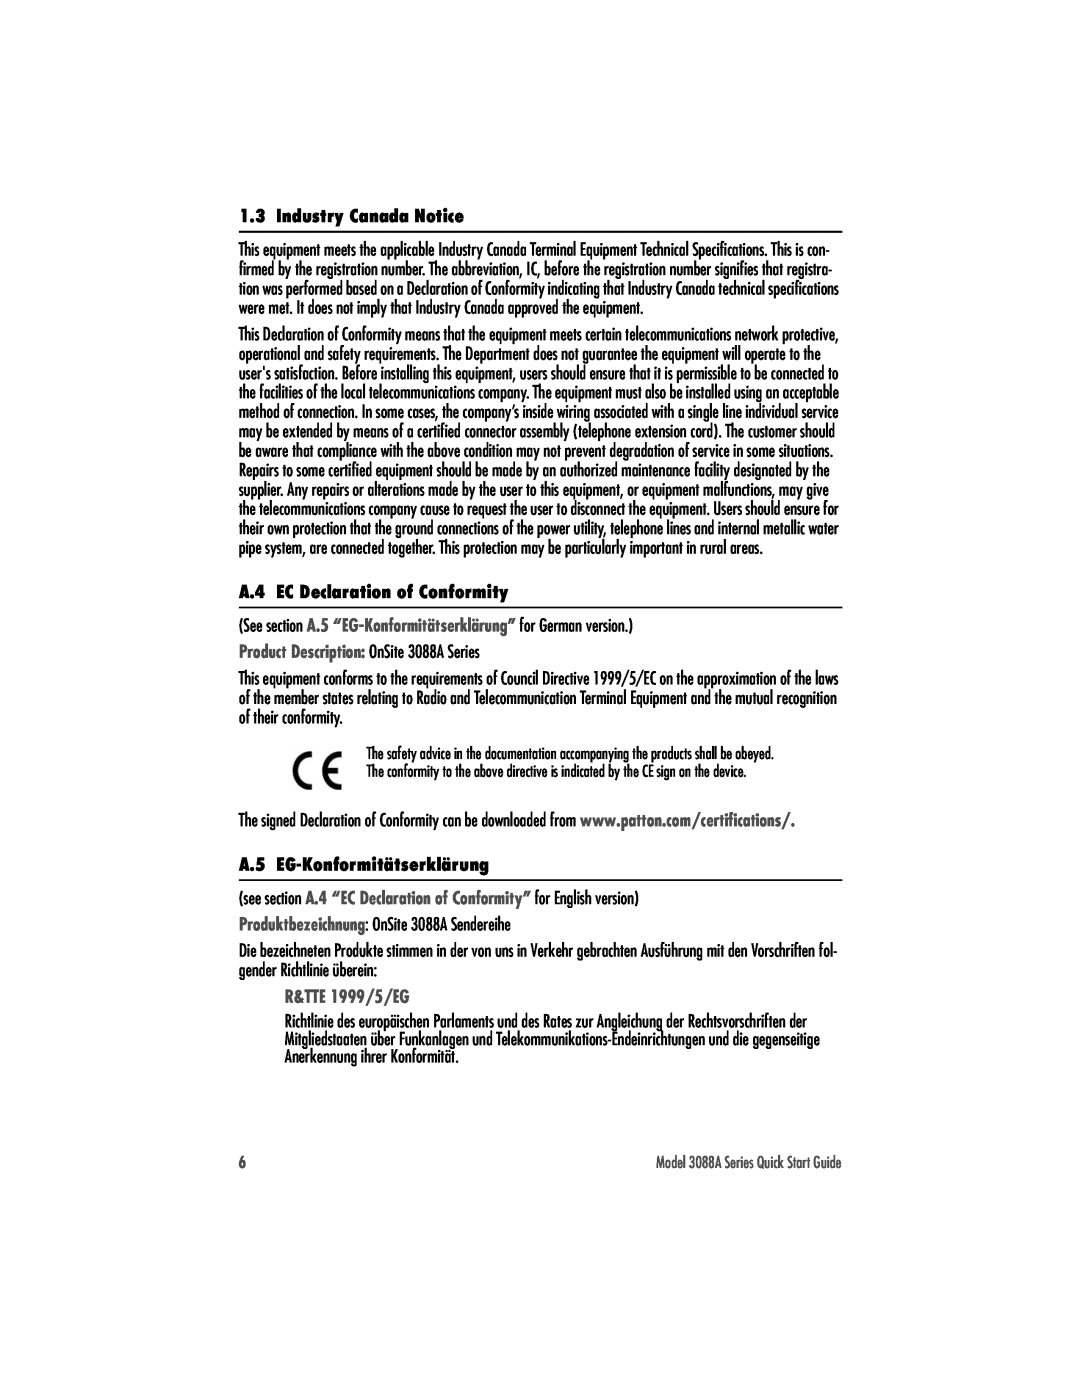 Patton electronic Industry Canada Notice, A.4 EC Declaration of Conformity, Product Description OnSite 3088A Series 